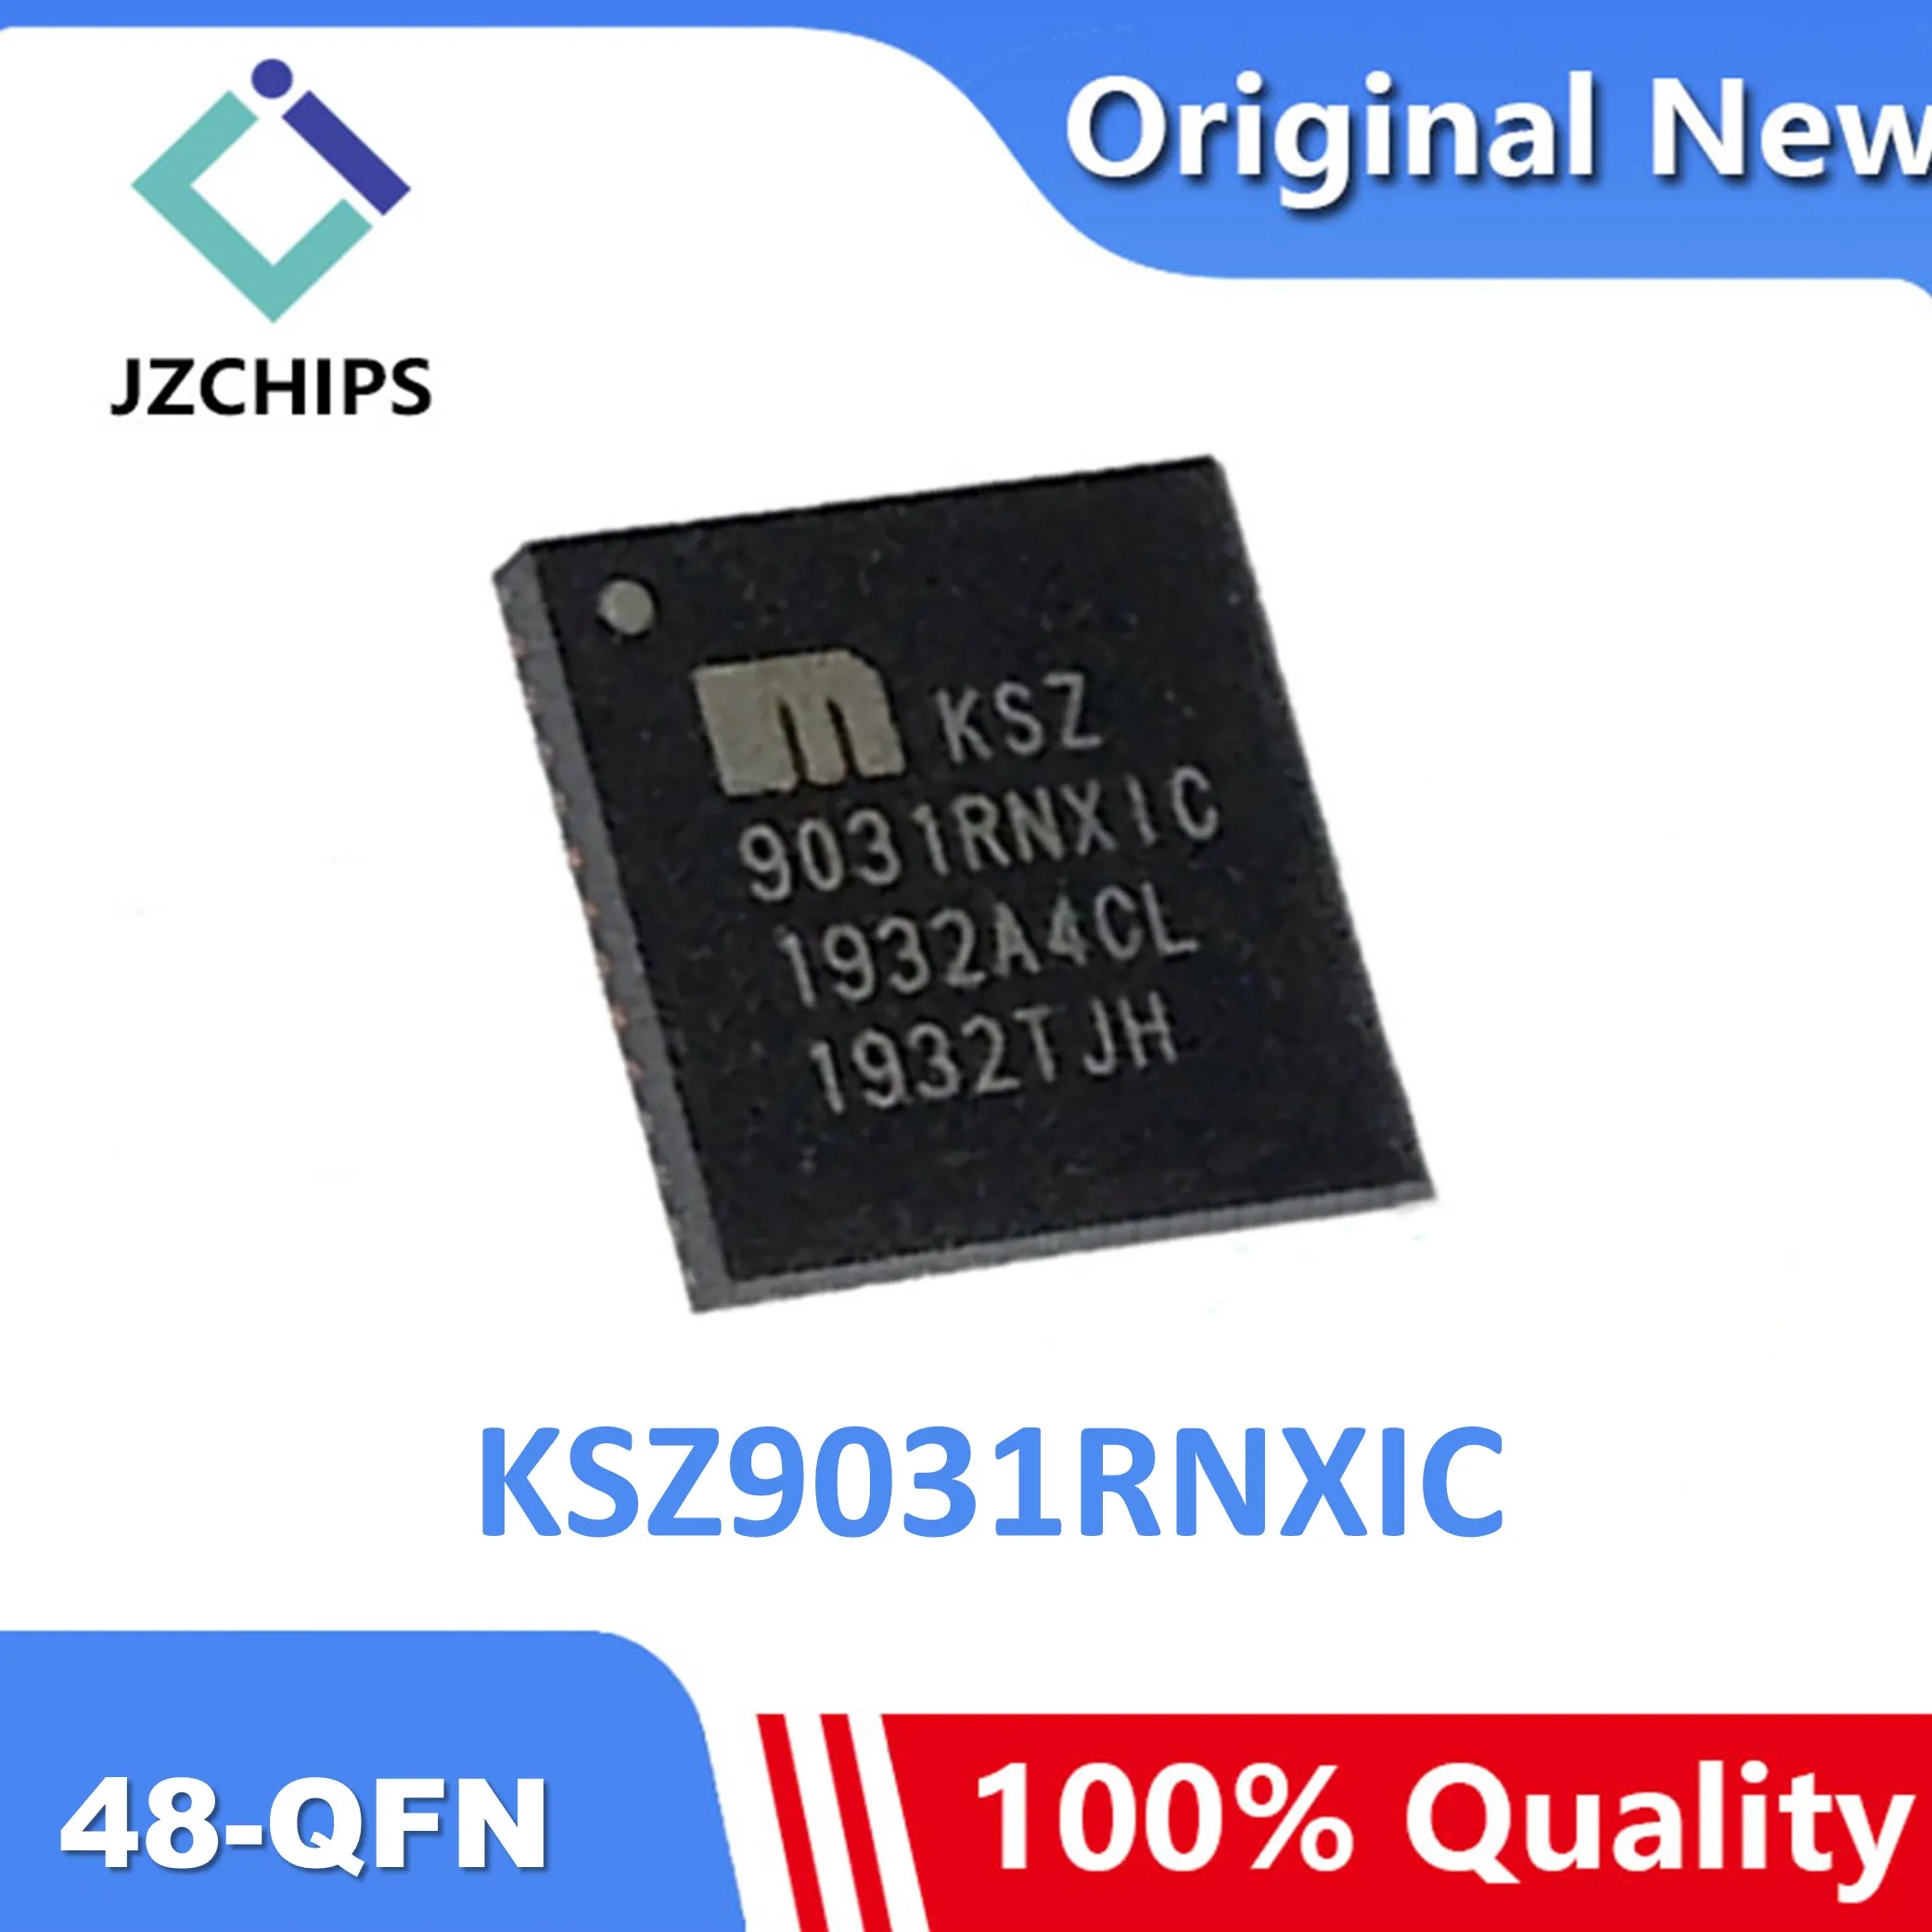 KSZ9031RNXIC Transceiver Full Ethernet 48-QFN New & Original